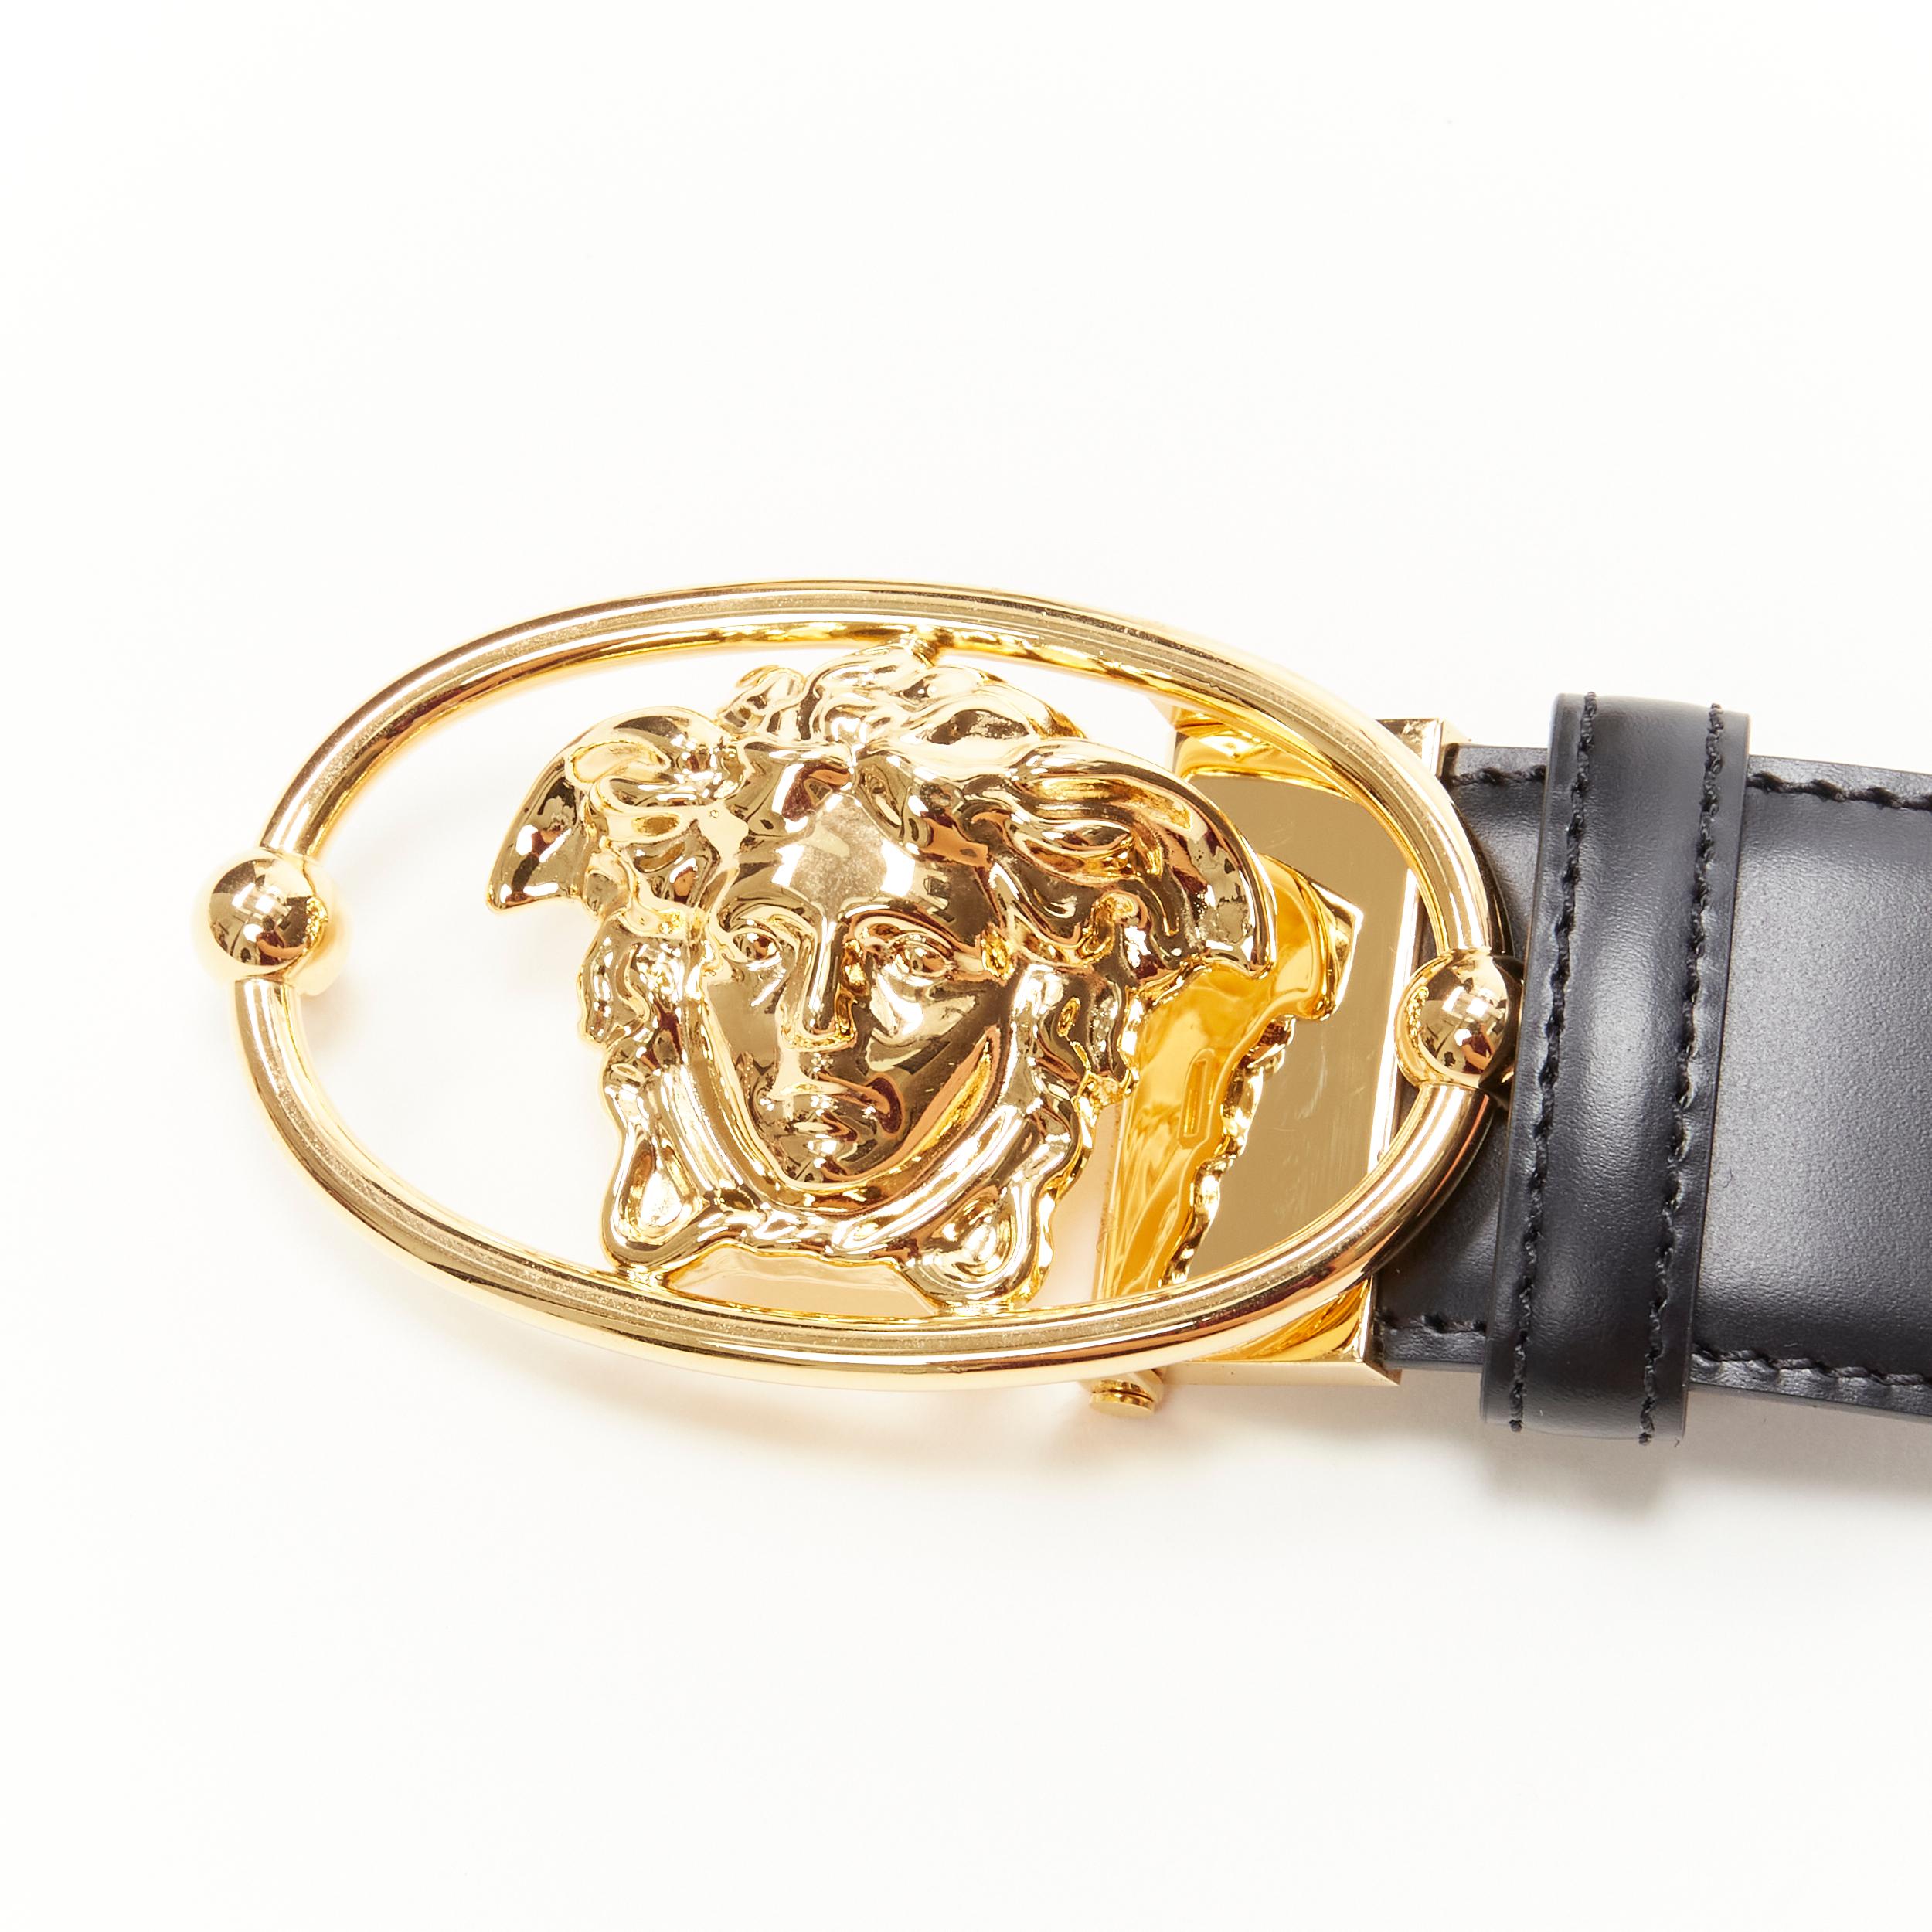 new VERSACE La Medusa Insignia gold oval 3D buckle black leather belt 110cm 44